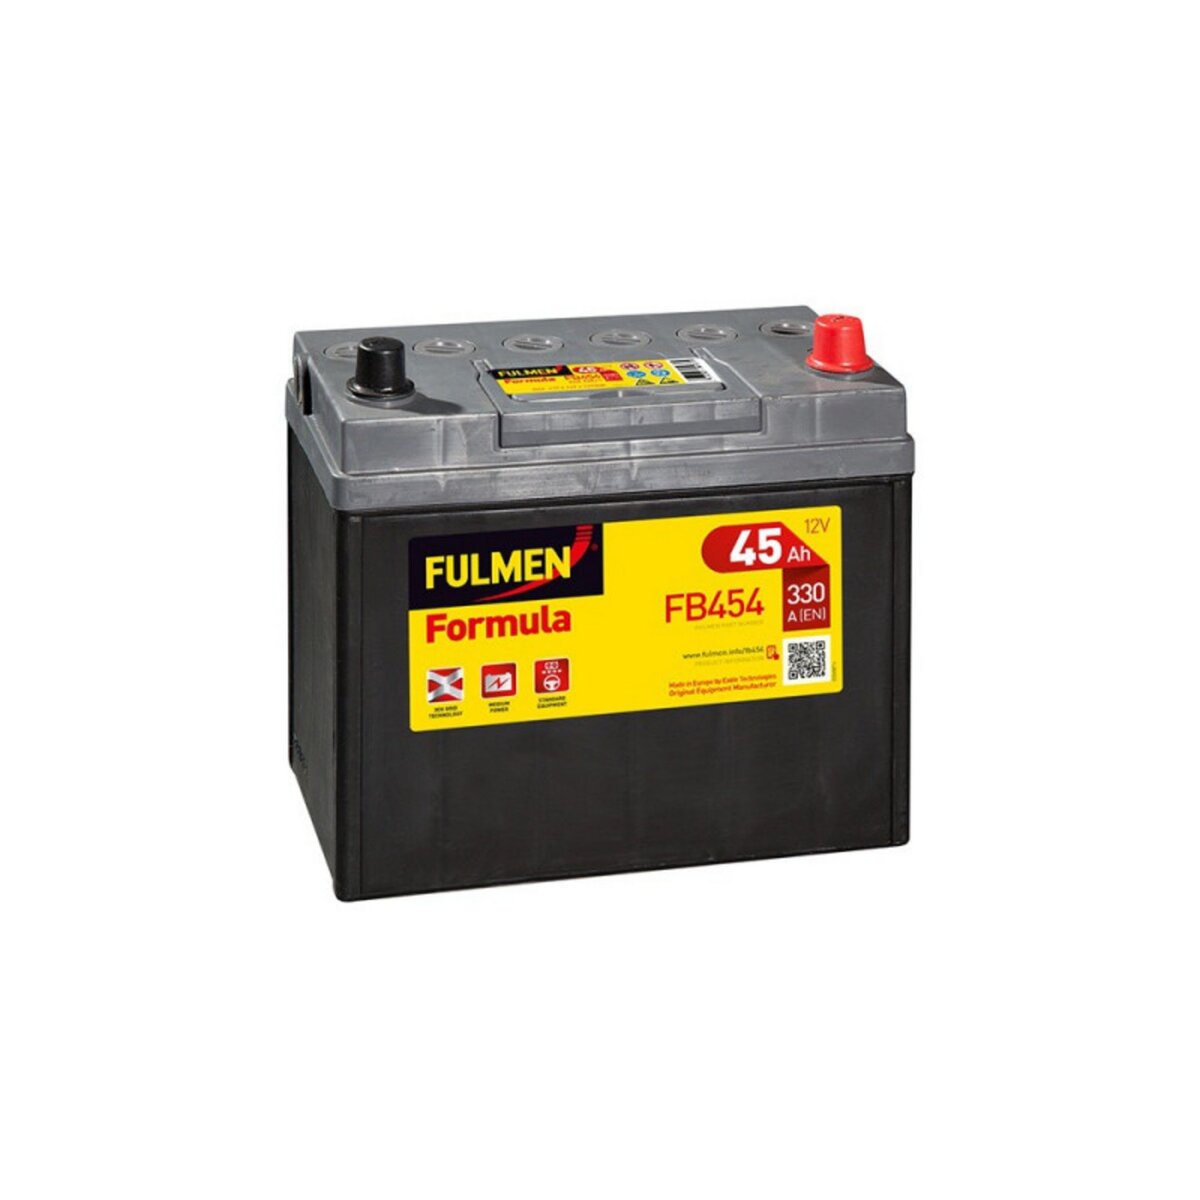 FULMEN Batterie FULMEN Formula FB454 12v 45AH 330A